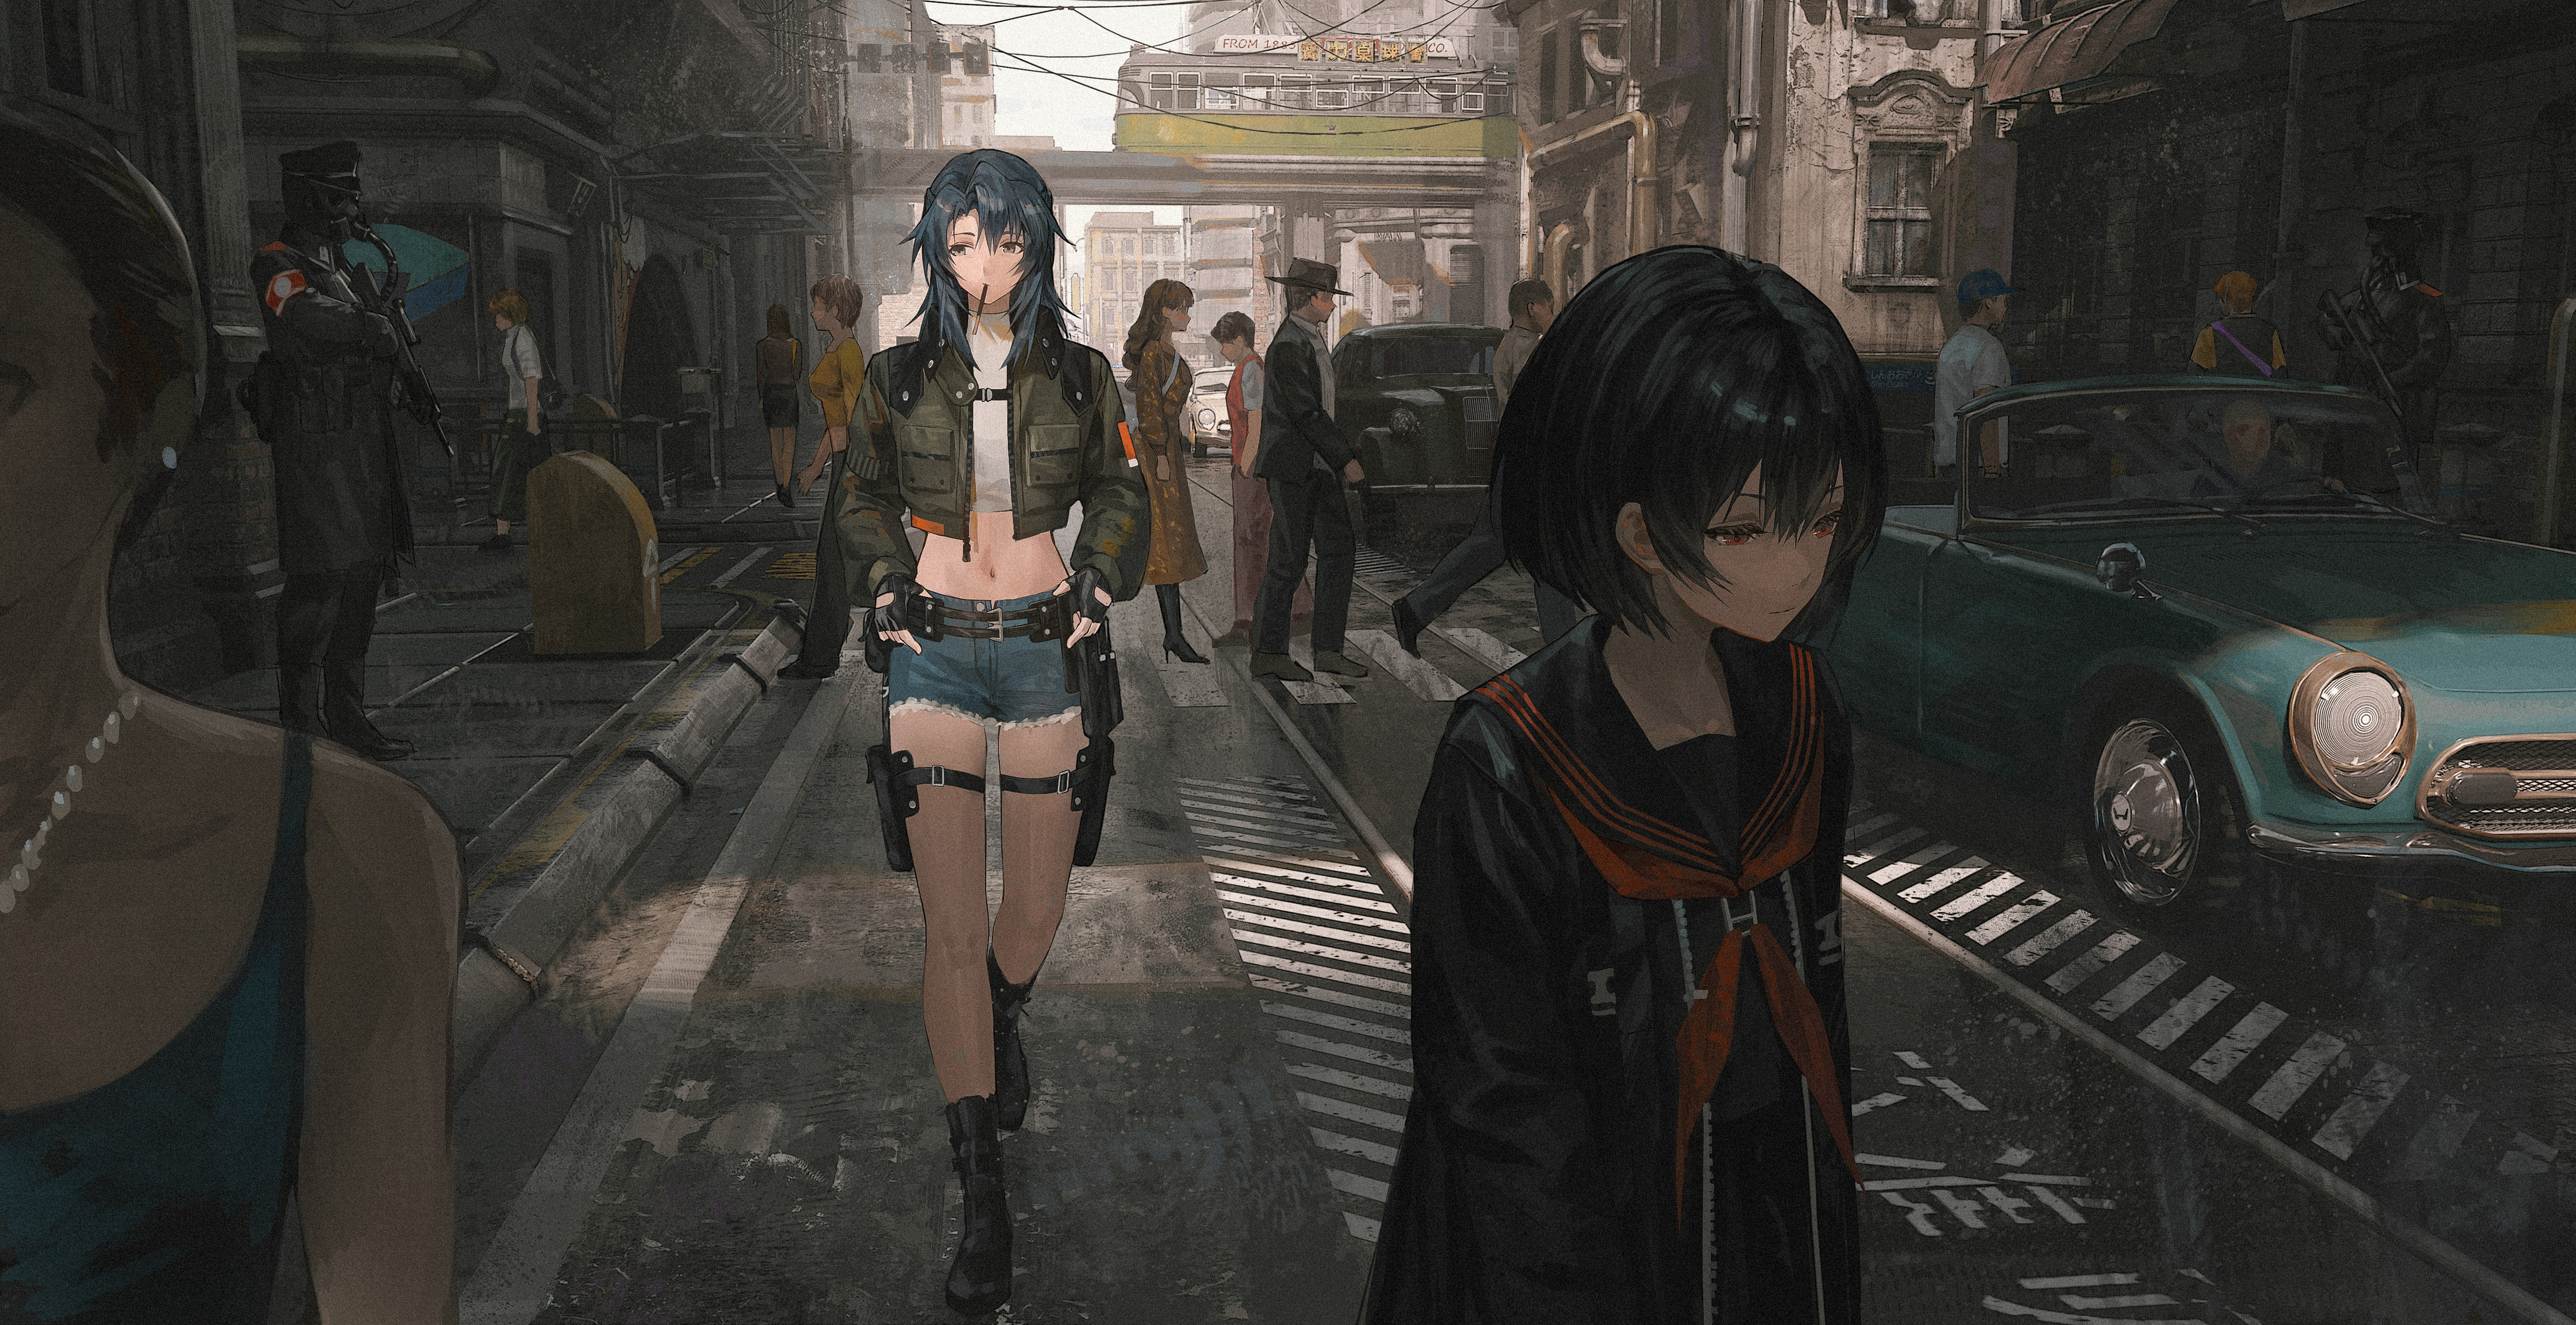 Anime Anime Girls Pixiv Street Car Vehicle Digital Art Walking Hands In Pockets Jacket Looking Away  5000x2571